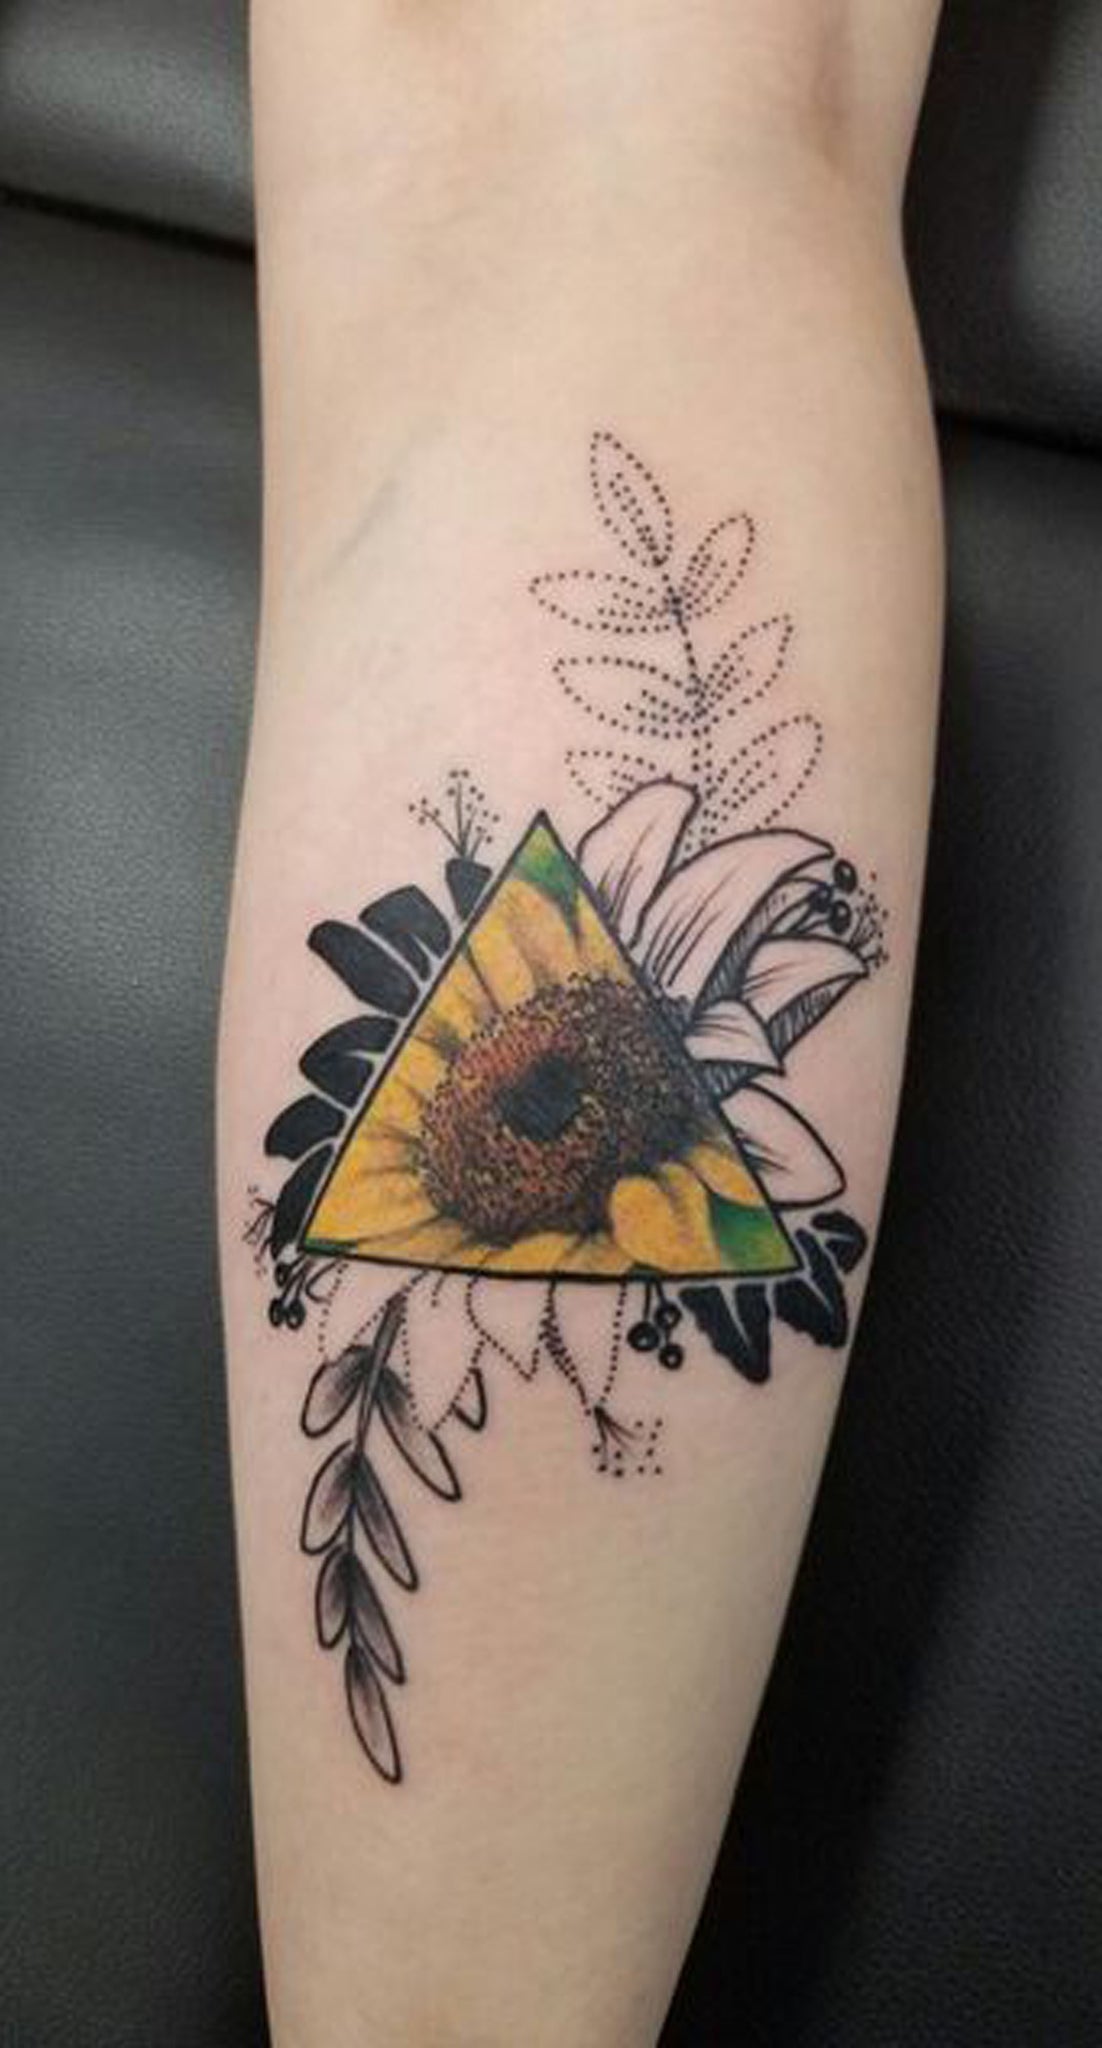 Geometric Unique Sunflower Forearm Tattoo Ideas for Women - Black White Colorful Cool Flower Arm Tattoo - www.MyBodiArt.com #tattoos